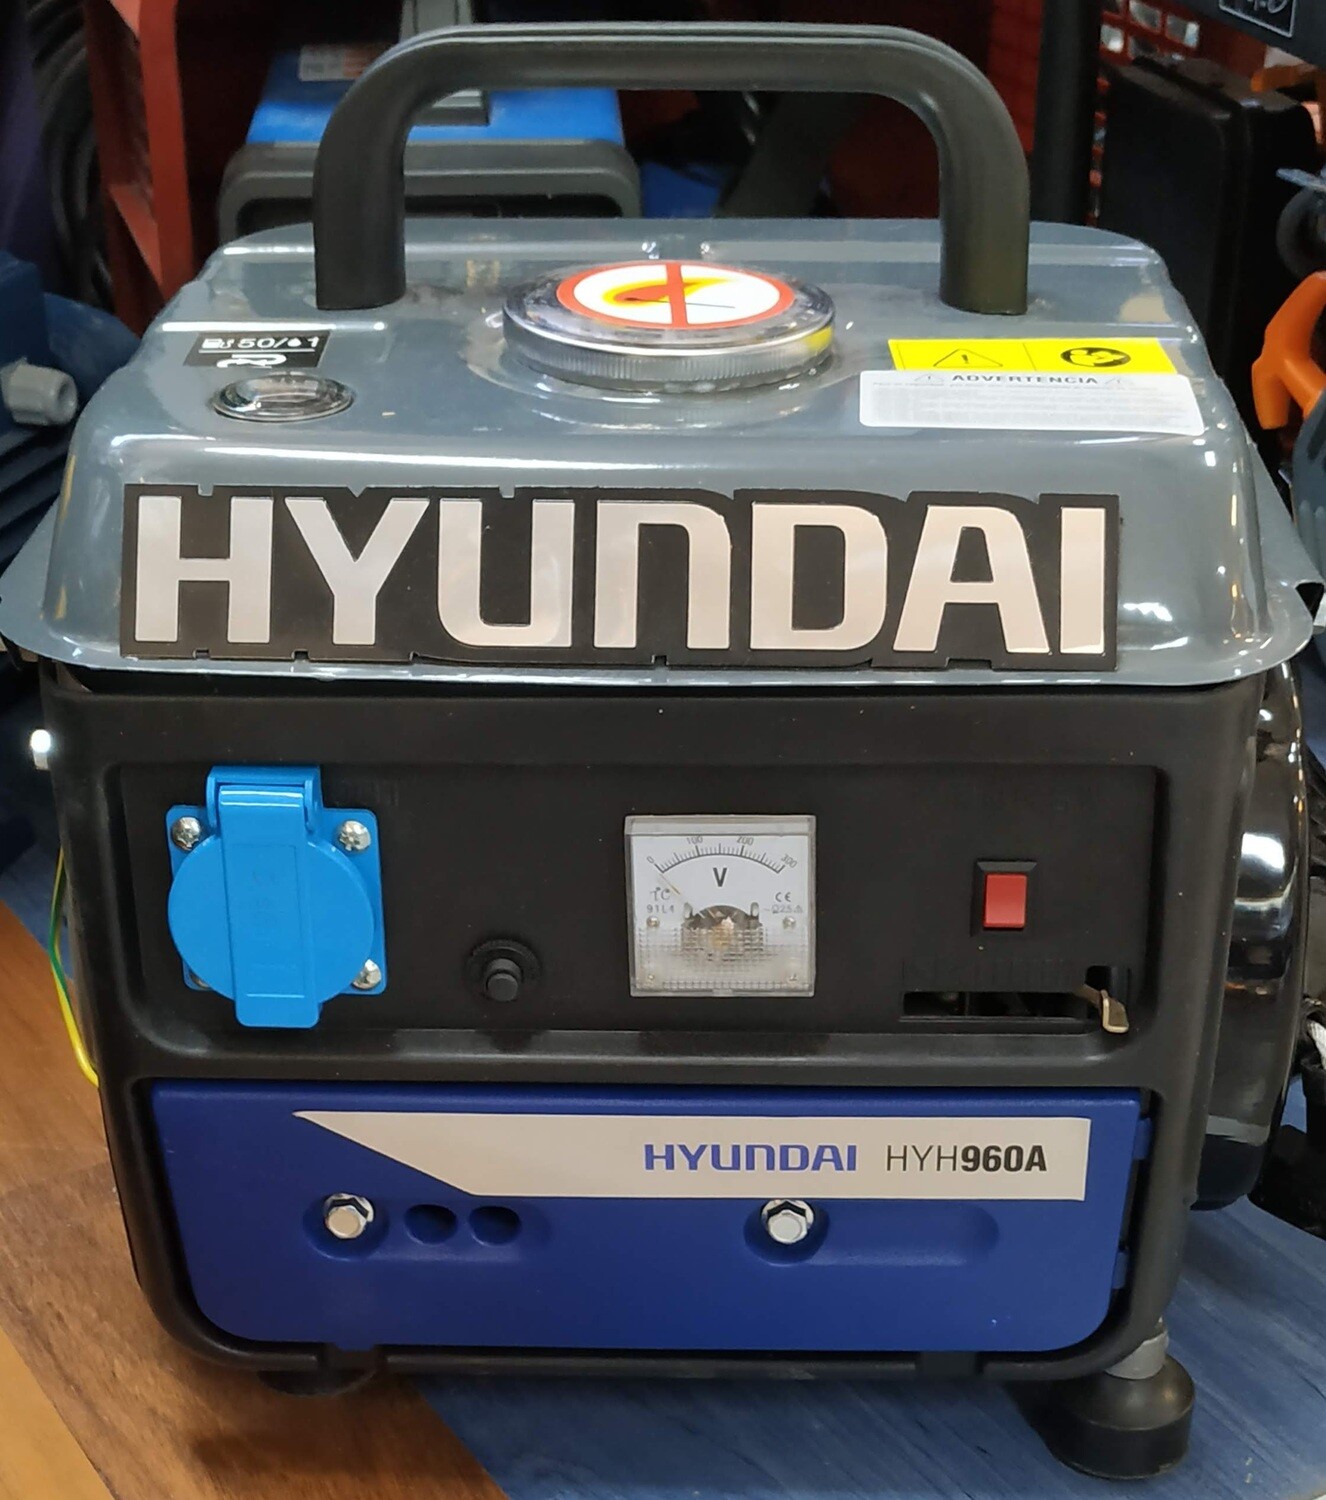 GENERADOR HYUNDAI HYH 960A 0,78 kw. 019-0001